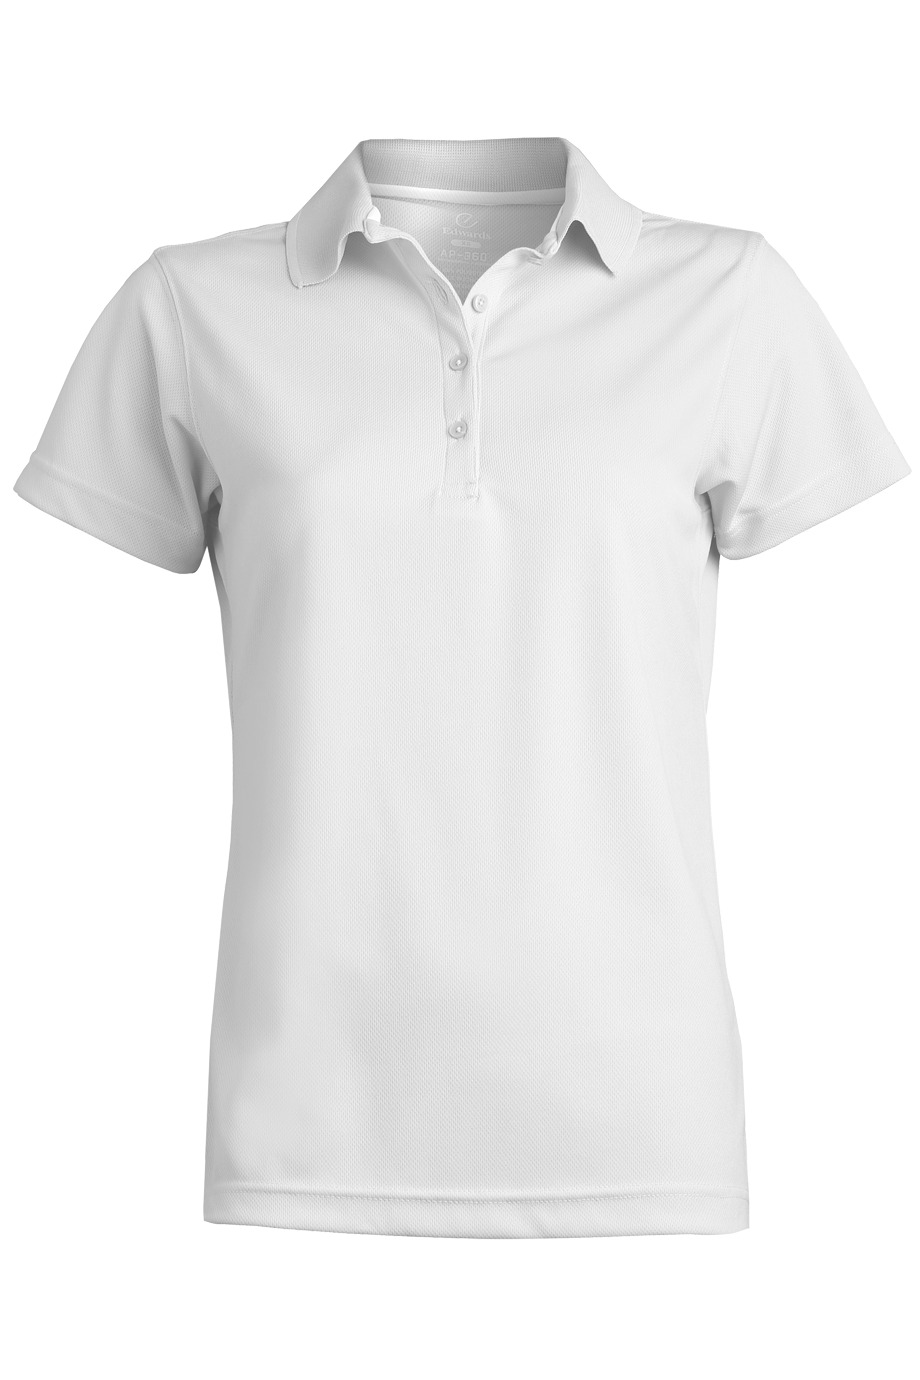 Edwards Garment 5500 - Women's Soft Blended Pique Polo